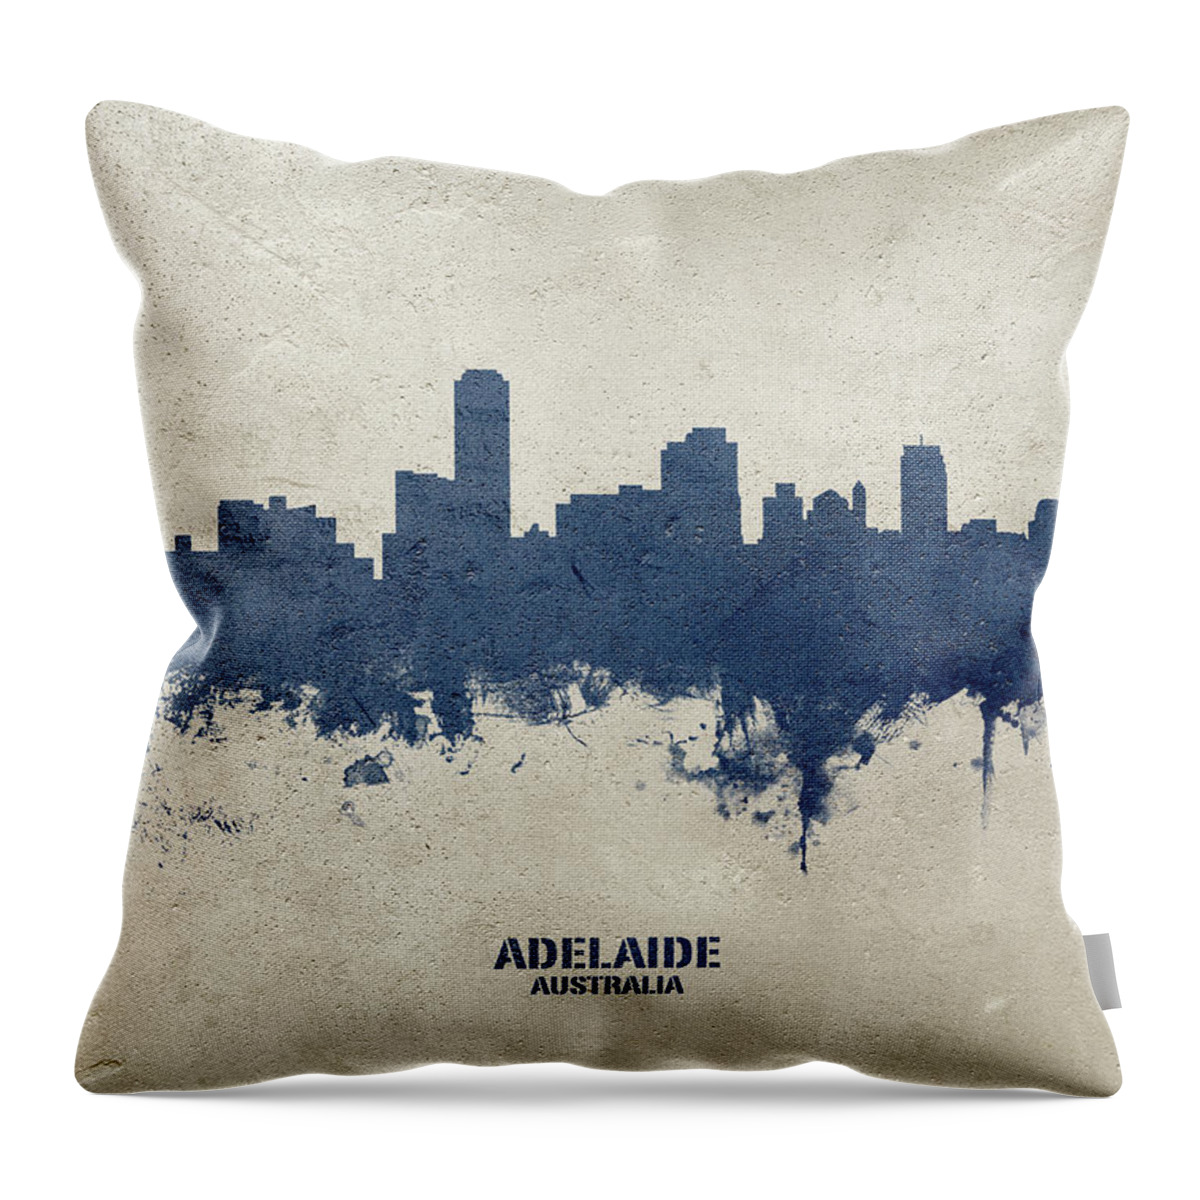 Adelaide Throw Pillow featuring the digital art Adelaide Australia Skyline #24 by Michael Tompsett